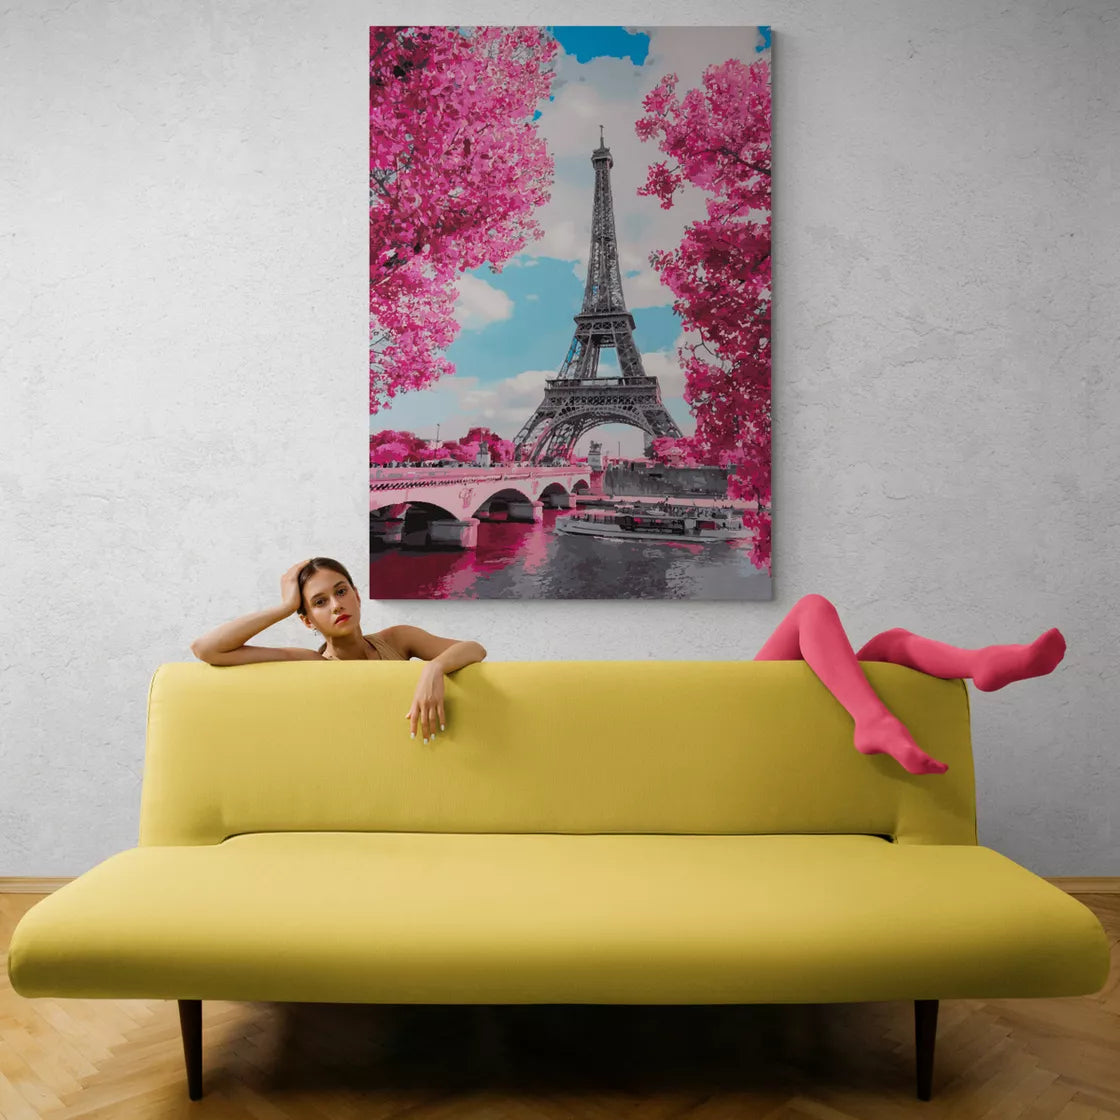 Marco Barberio - 'Blossoming Paris' - Original Art